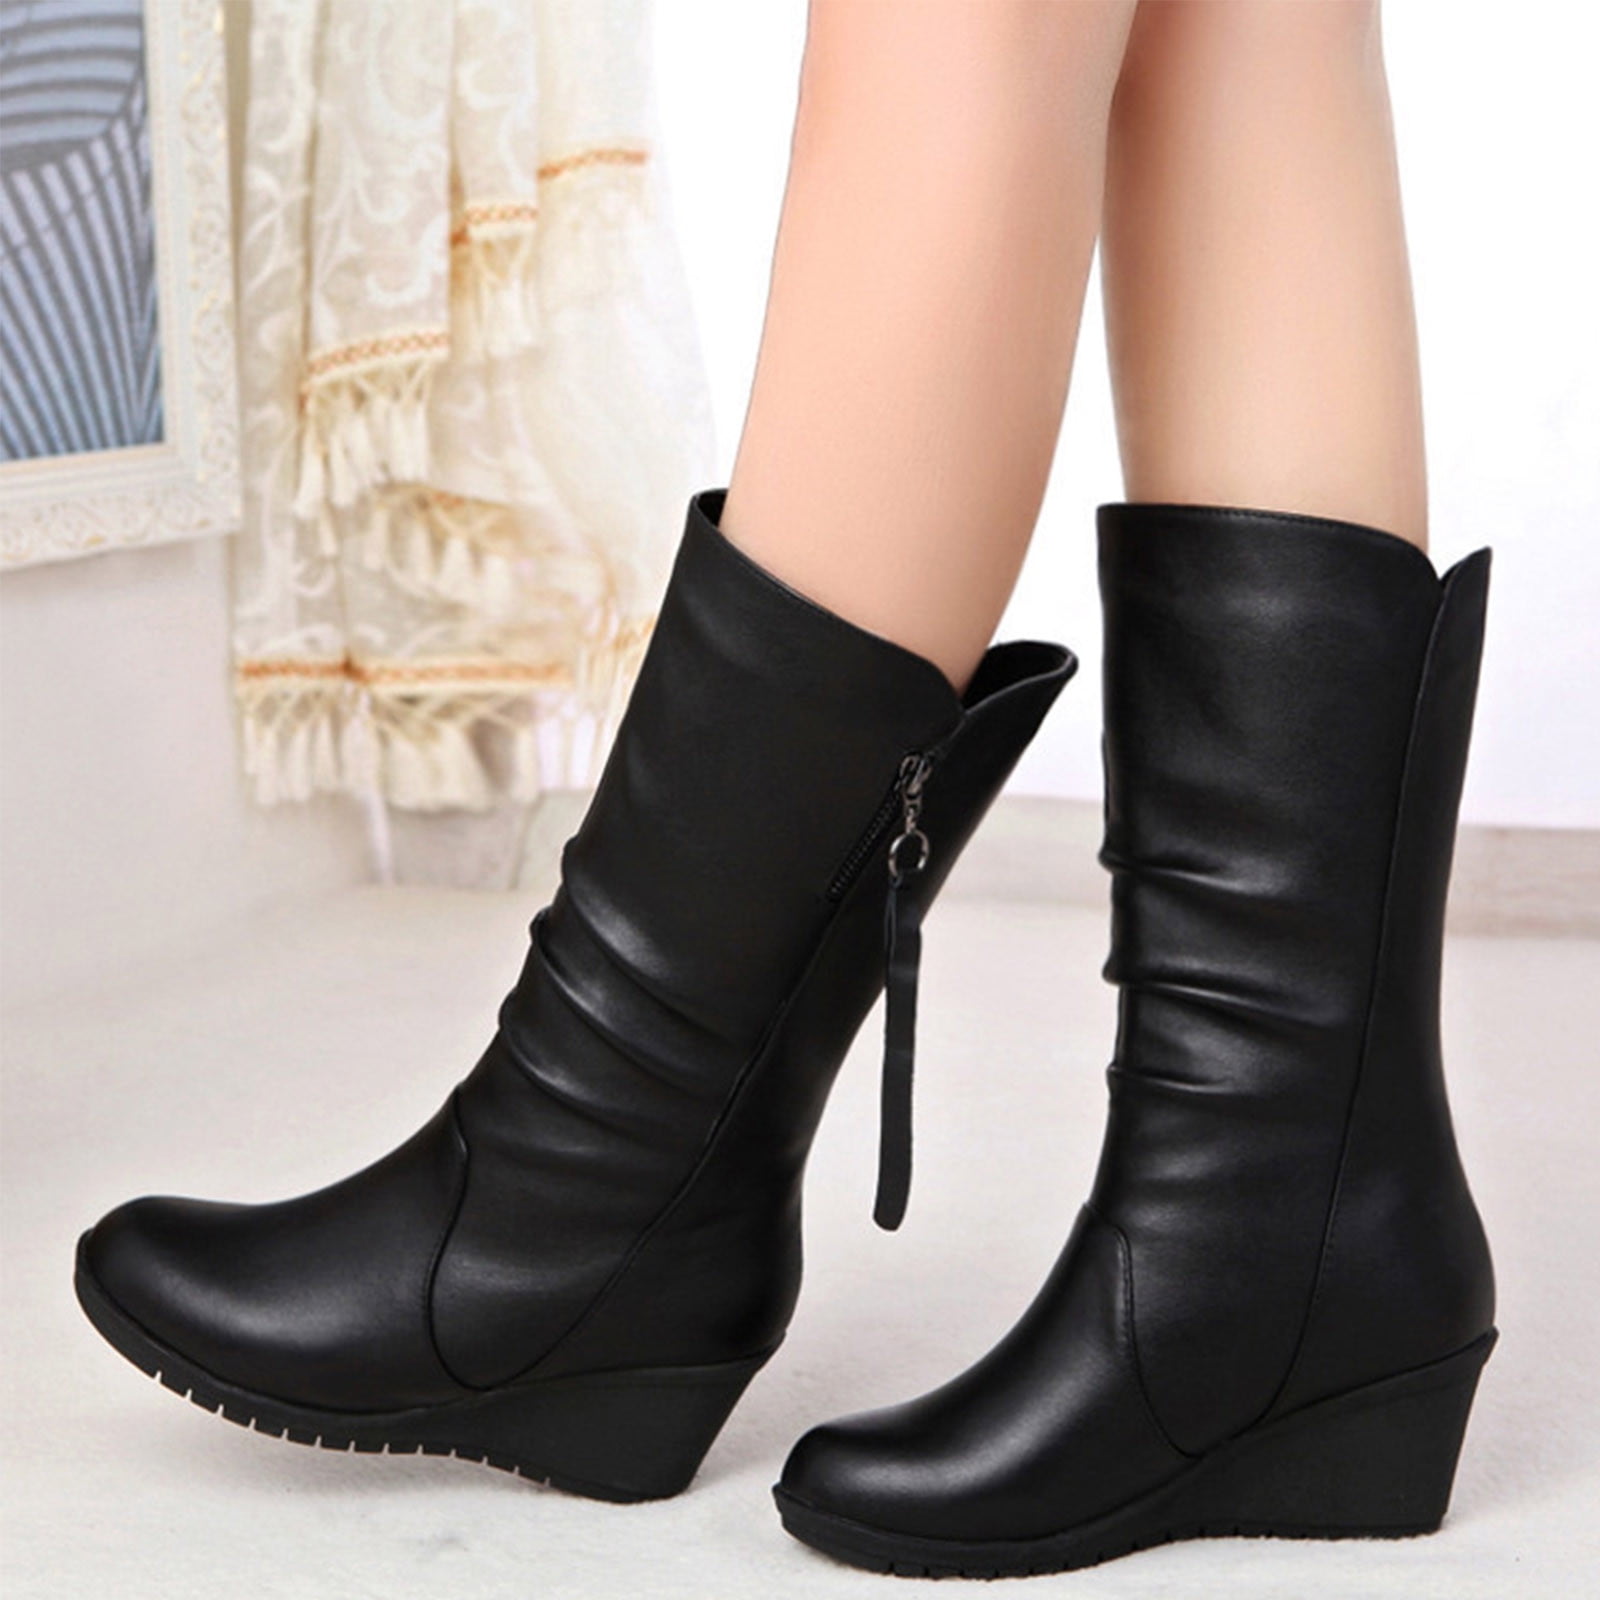 Tejiojio Clearance Women Ankle Boots High Heel Casual Female Fashion  Platform Wedge Heel Zip Mid-Calf Black Shoes